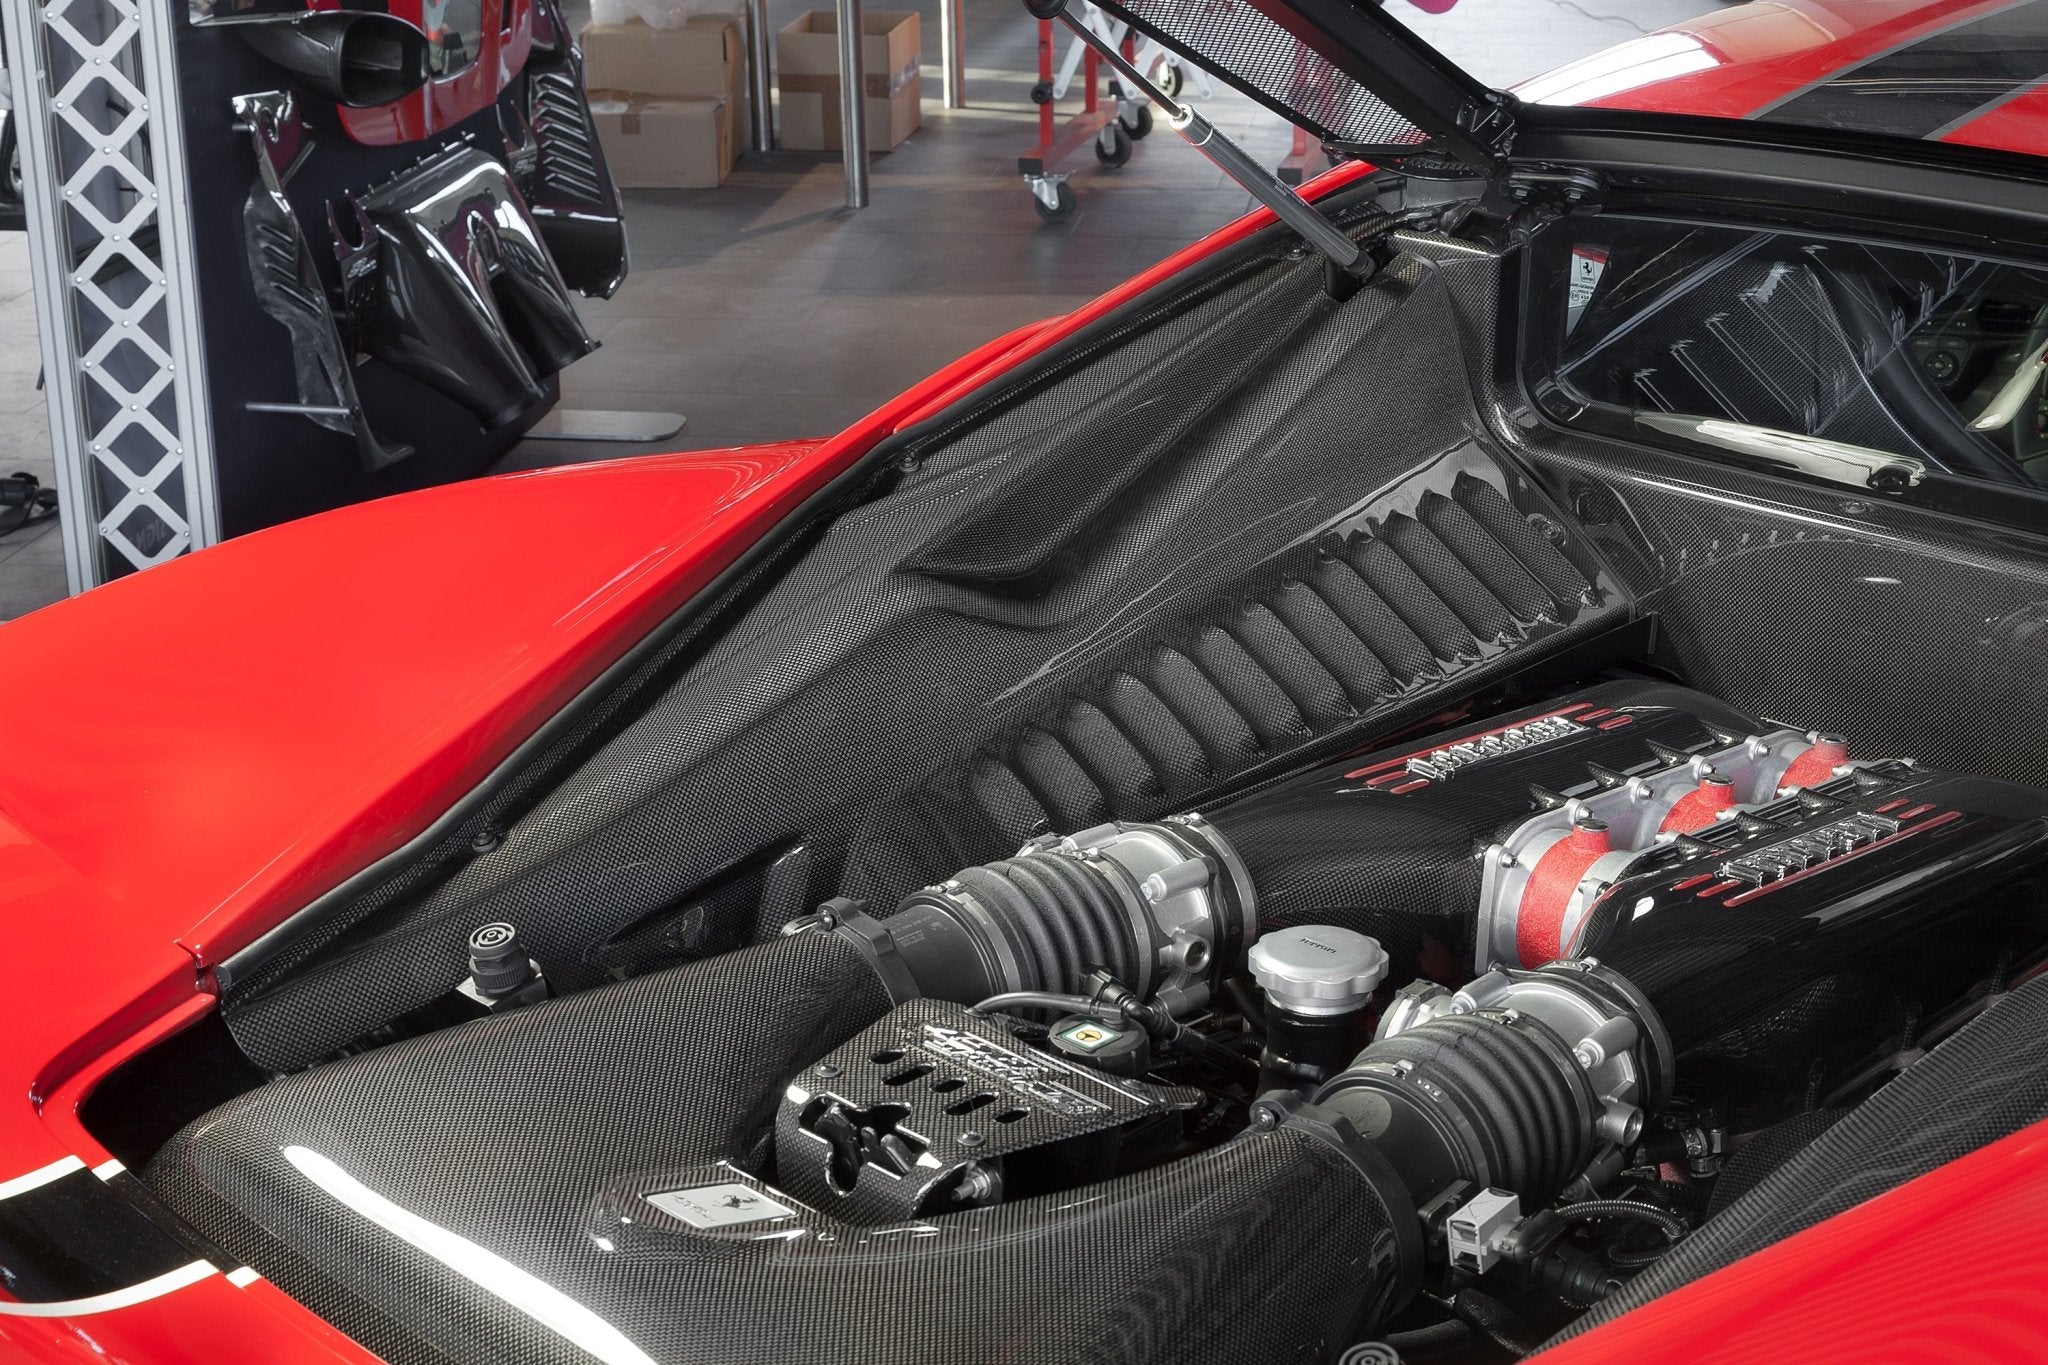 Ferrari 458 Italia/Speciale - Carbon Side Engine Compartment